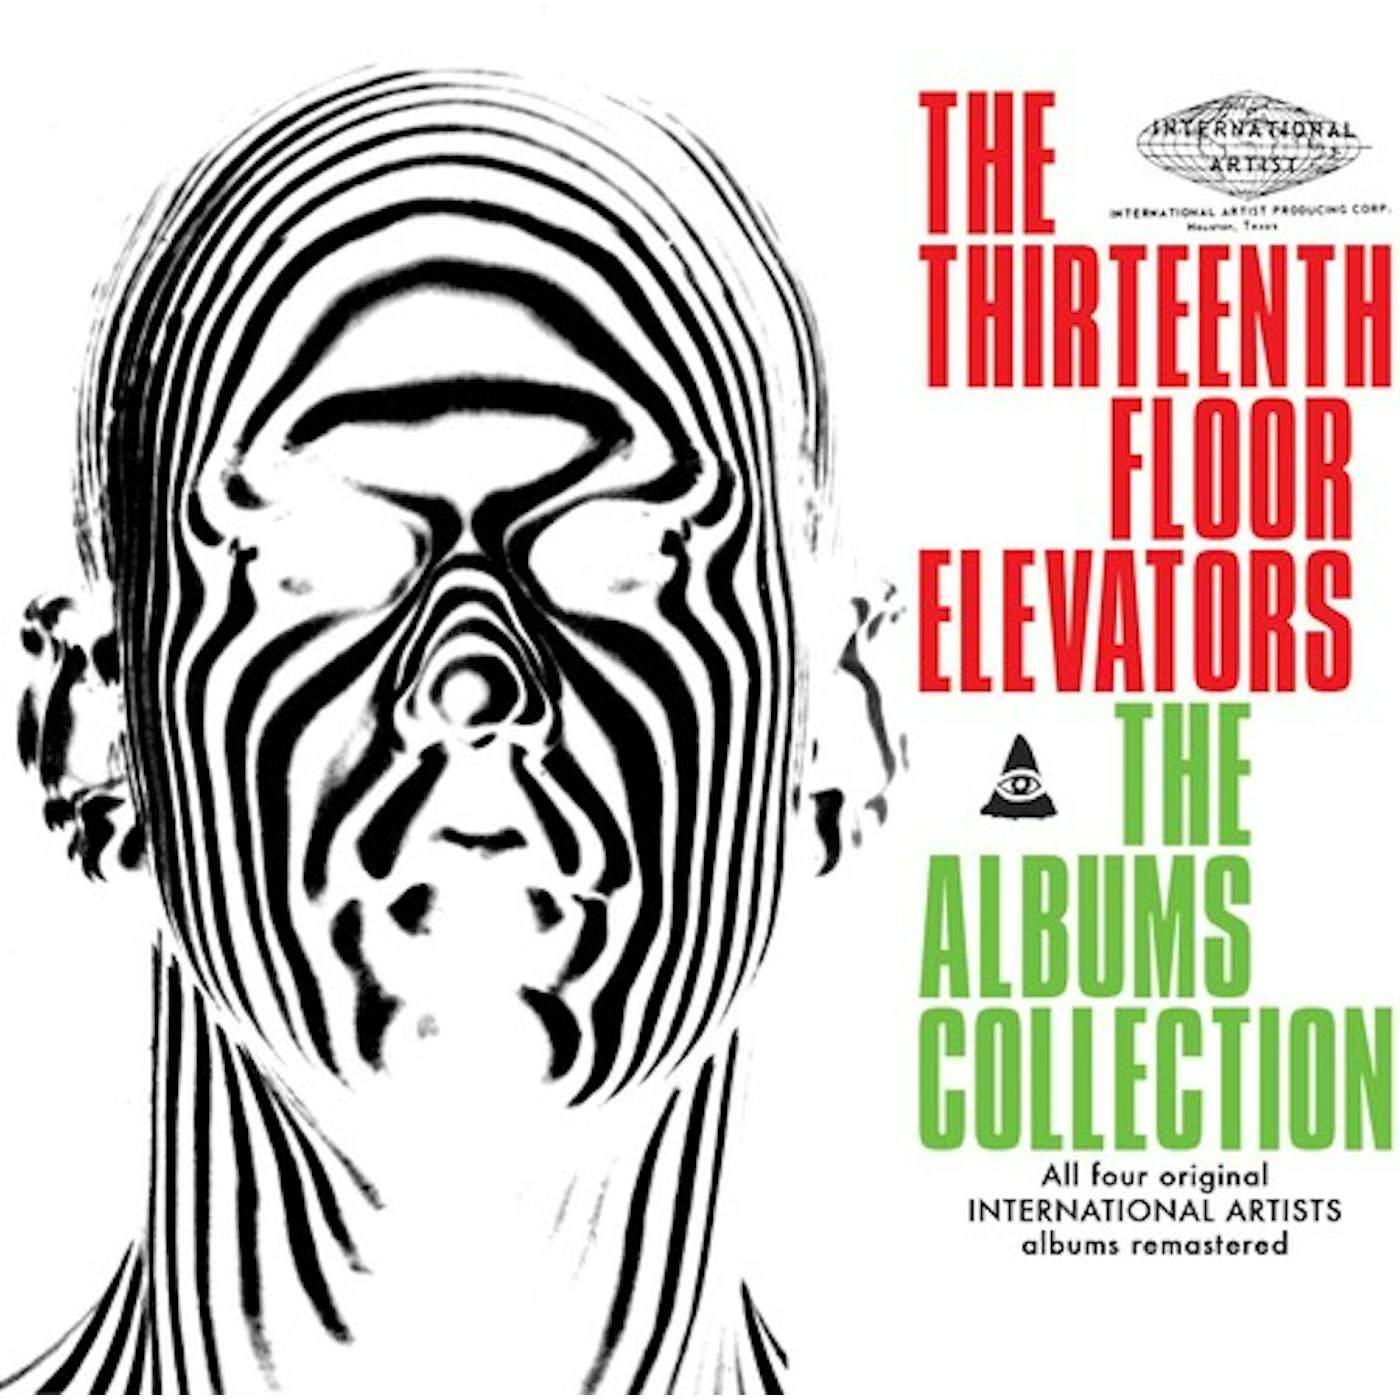 13th Floor Elevators ALBUMS COLLECTION CD